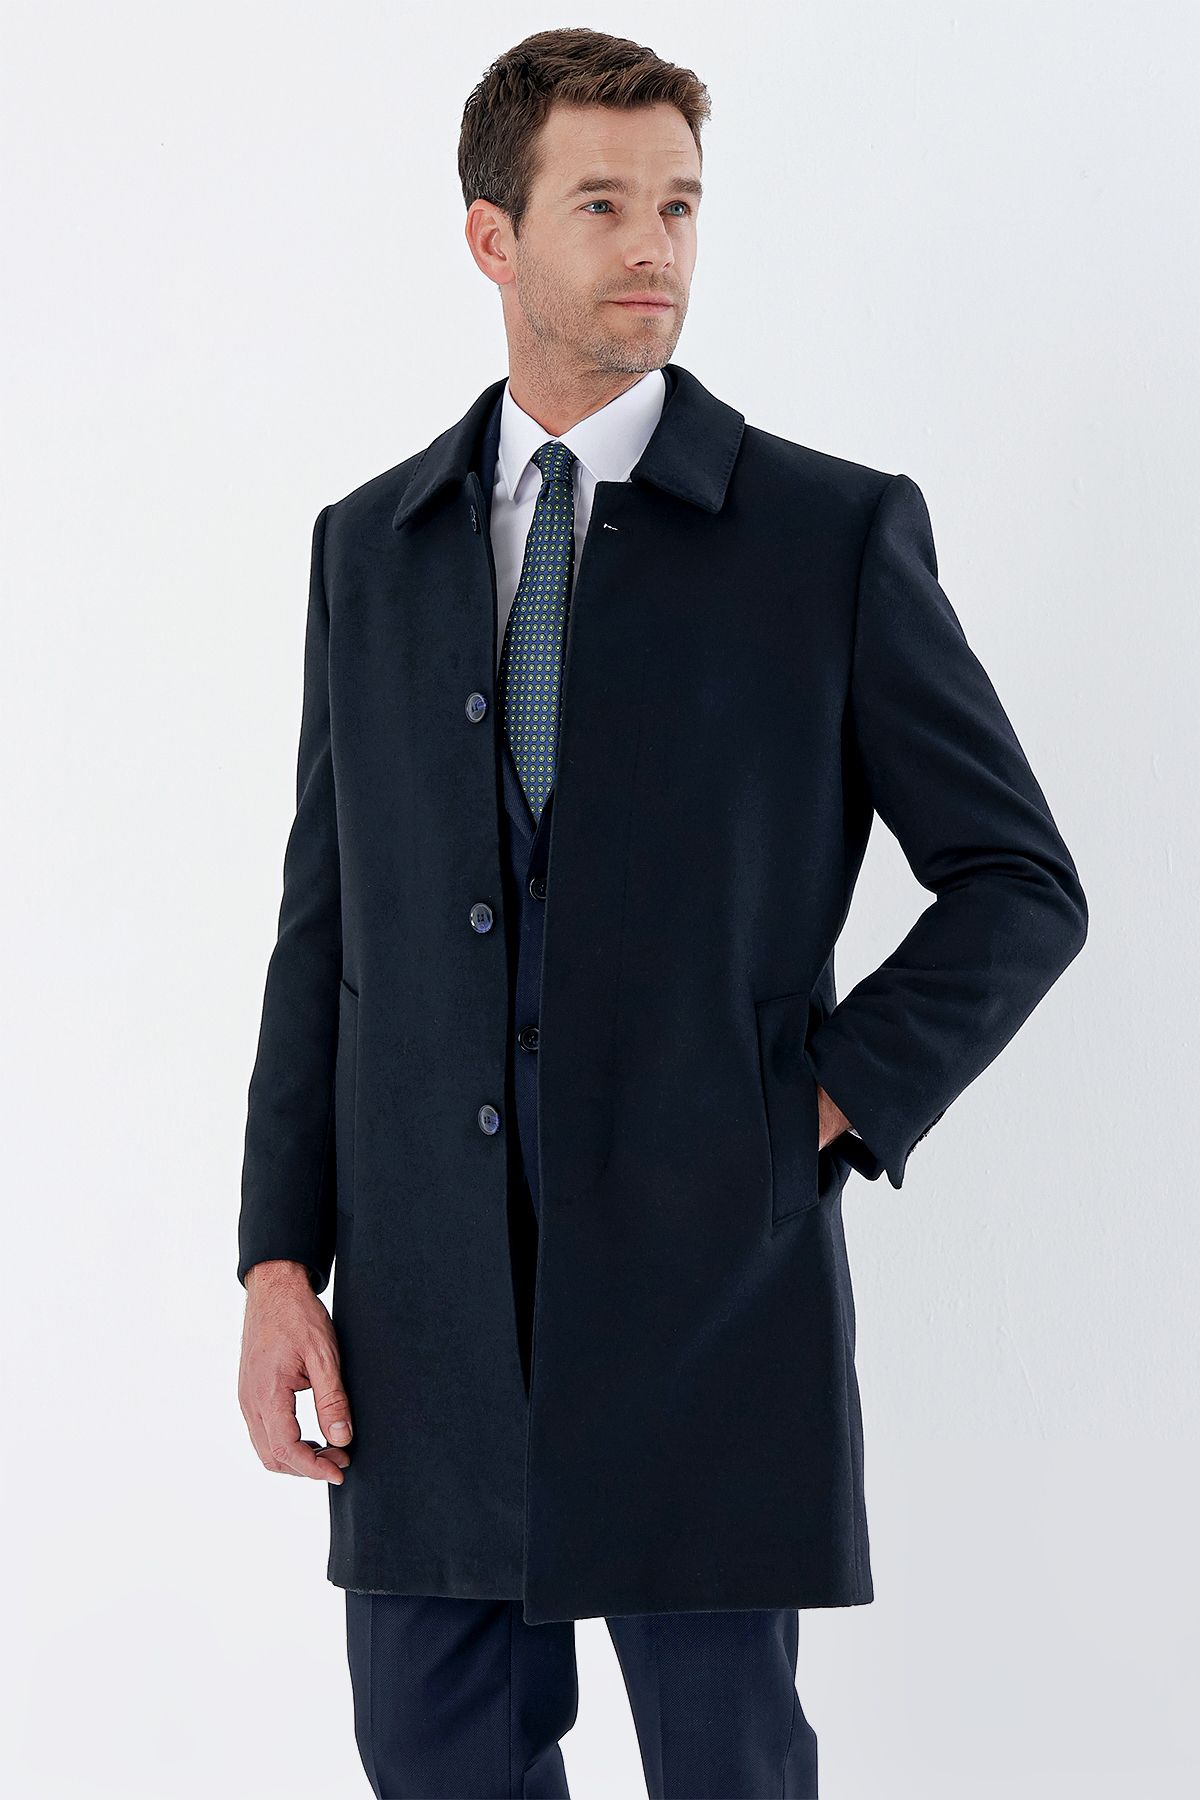 İmza Koyu Lacivert Kaşe Berberi Yaka Yırtmaçlı Kapitoneli Astar Comfort Fit Rahat Kesim Klasik Palto 1005